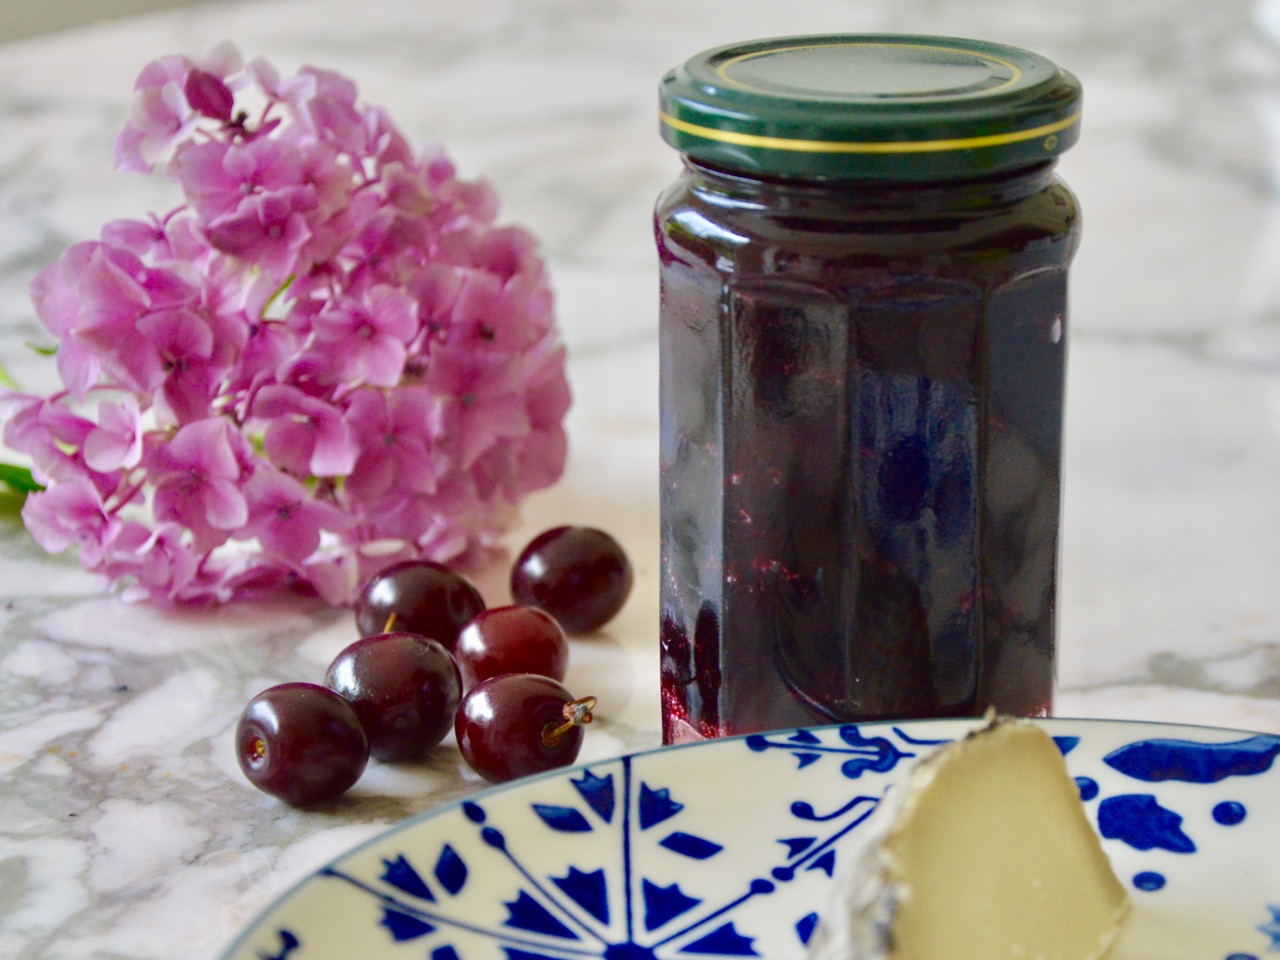 Black cherry jam with chestnut honey from Corsica